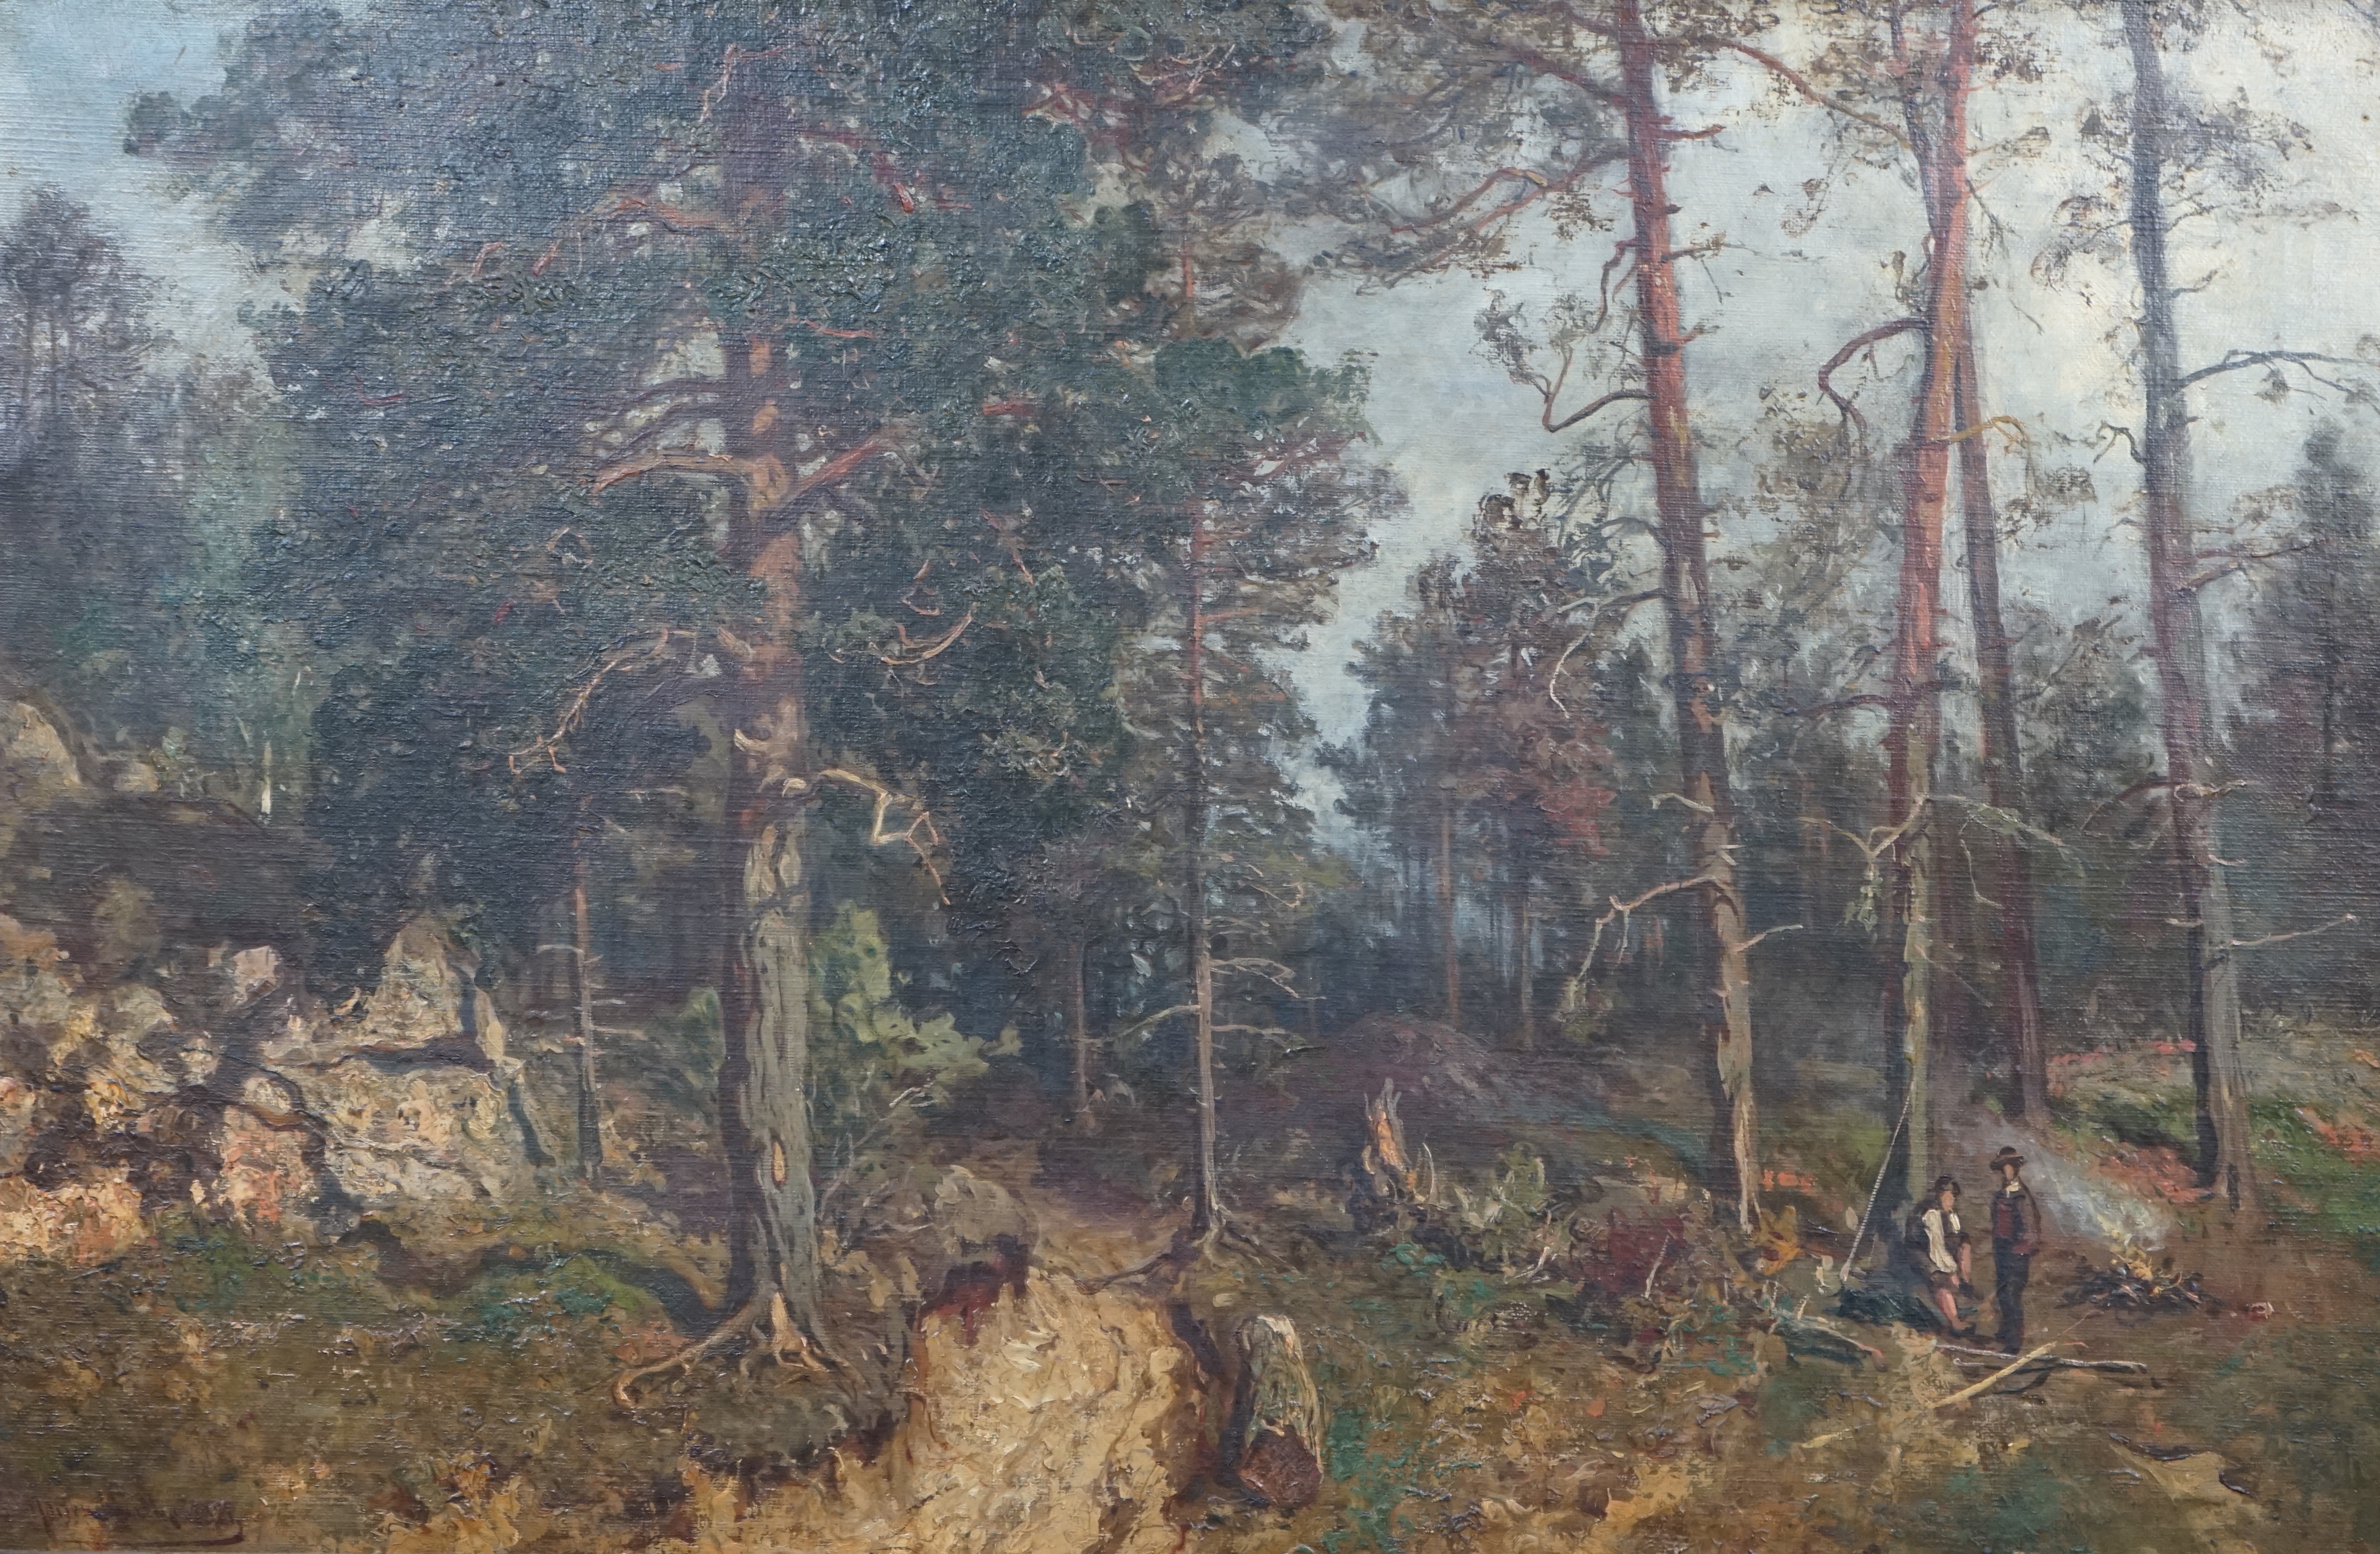 Morten Müller (Norwegian, 1828-1911), Woodmen in a forest clearing, oil on canvas, 40 x 62cm